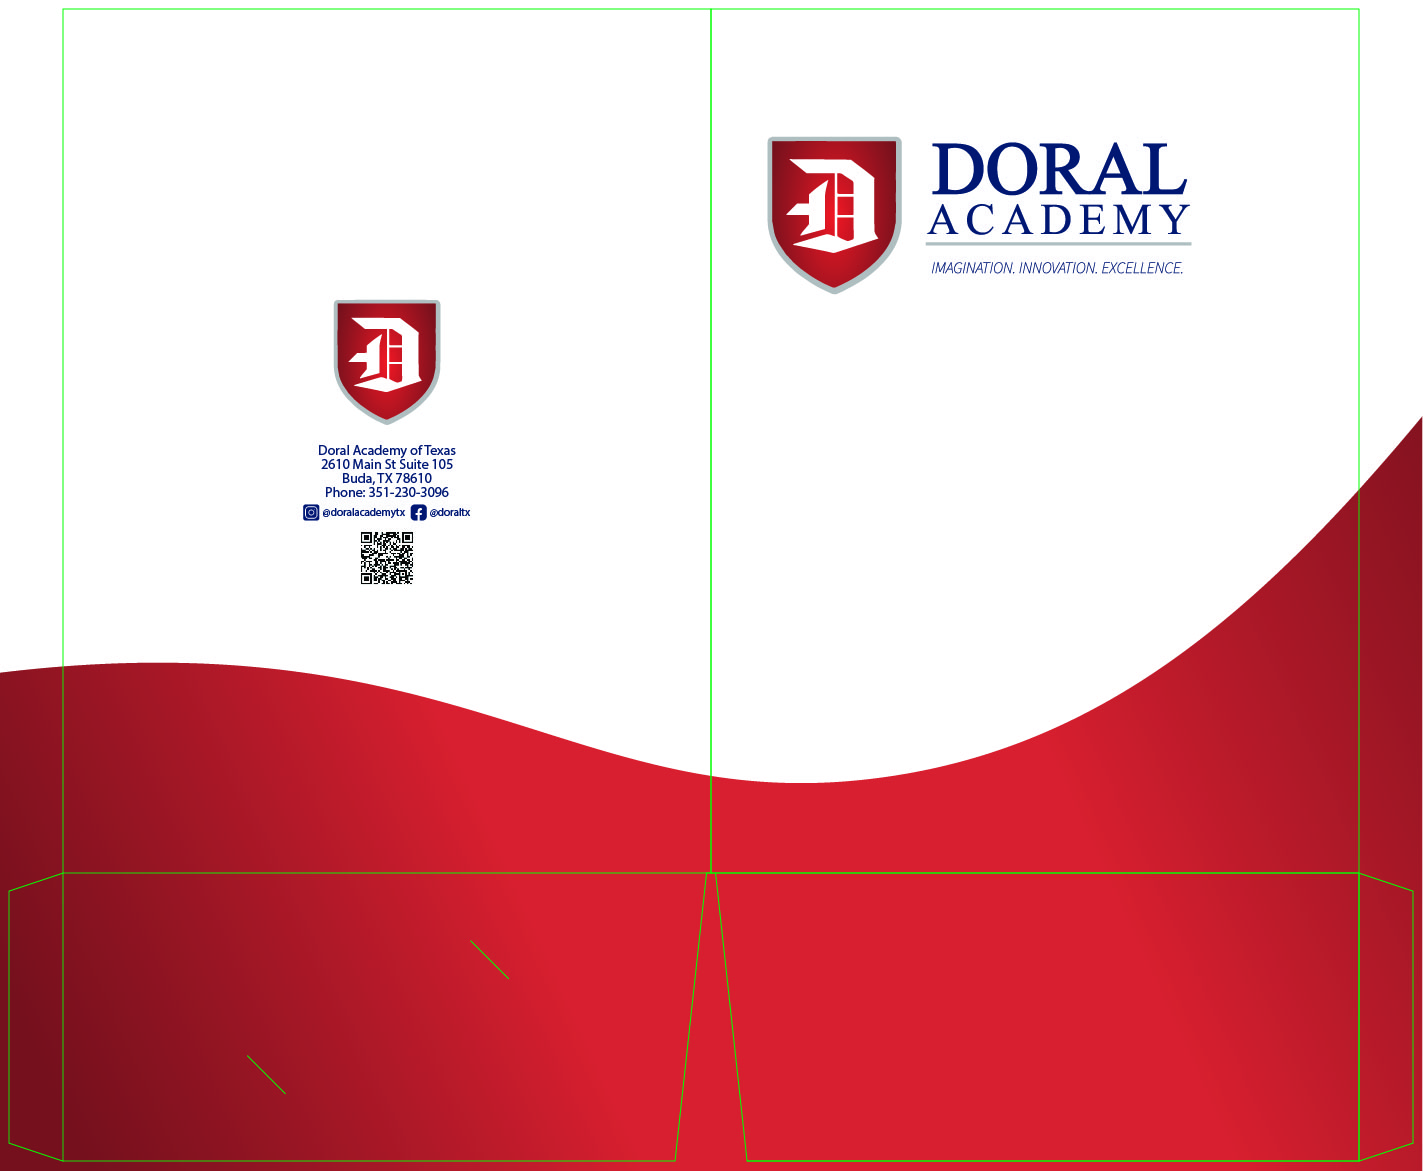 Third proposed design option for Doral Academy's presentation folders